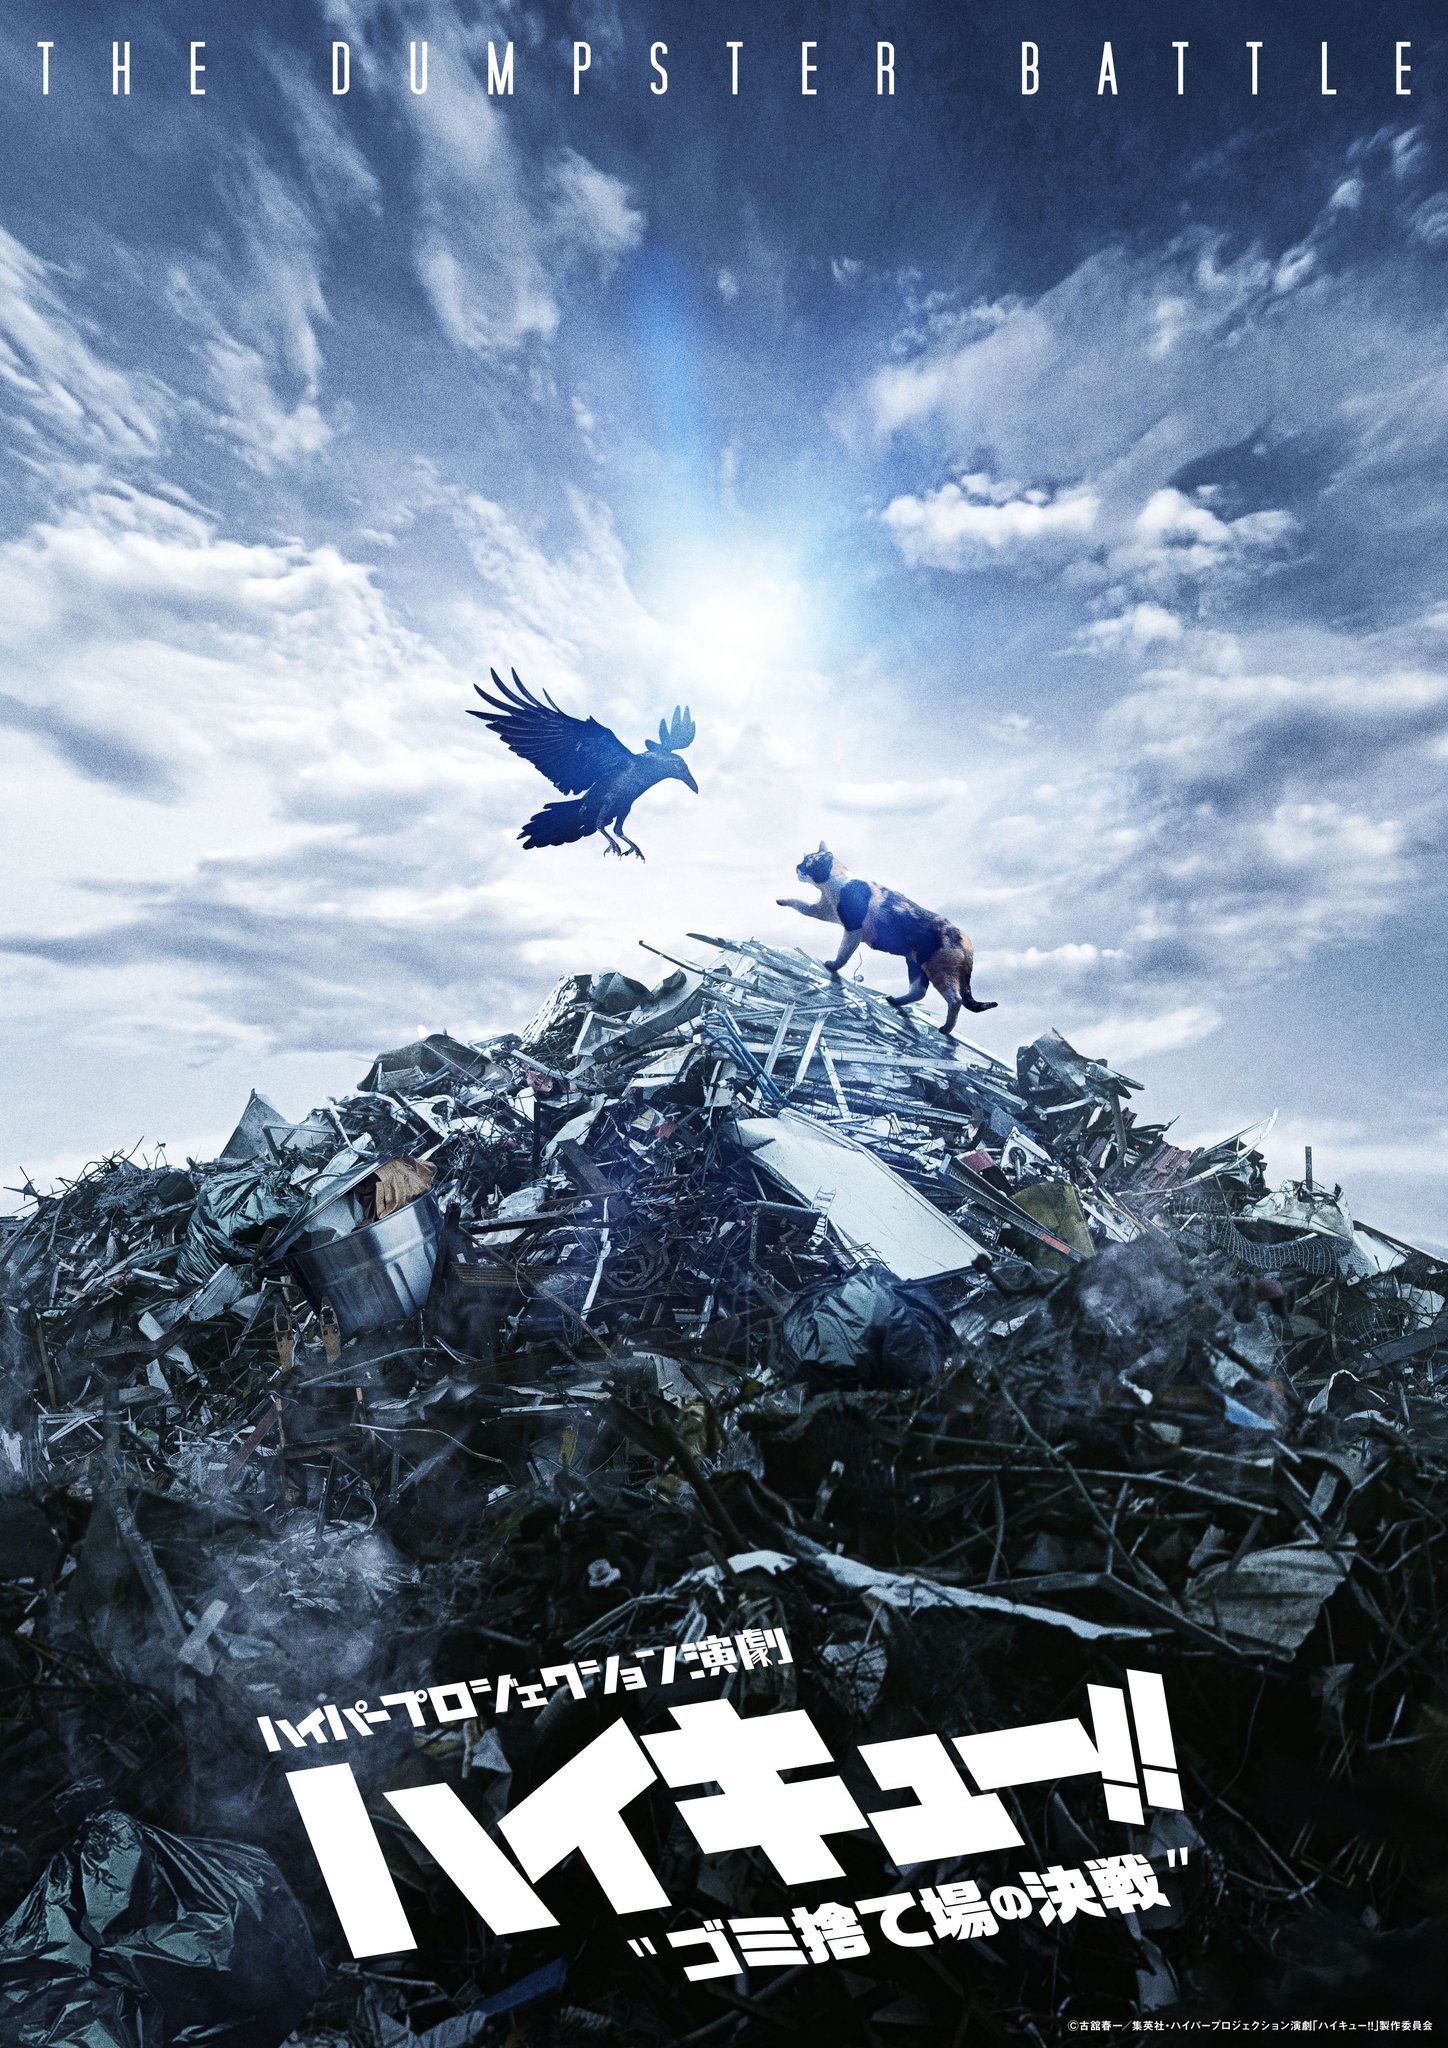 Haikyuu!!' Movie Trailer Brings Battle of the Garbage Dump To Big